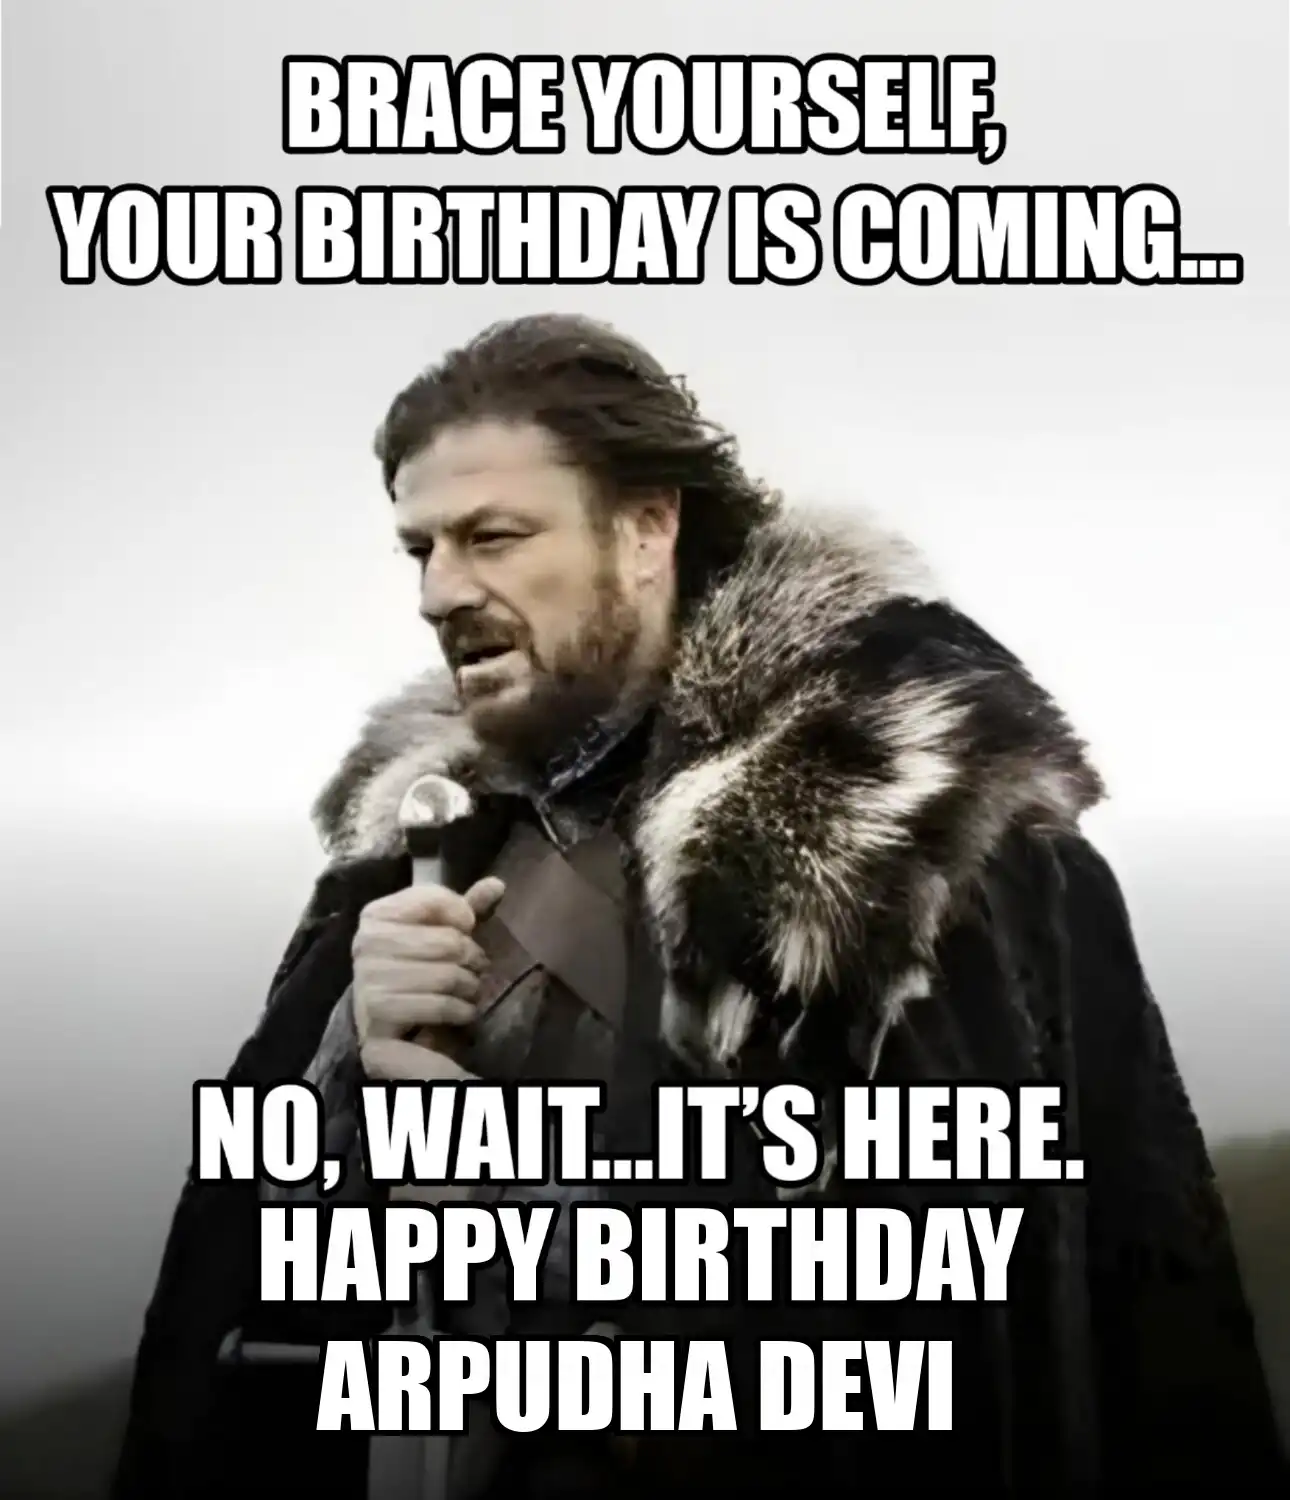 Happy Birthday Arpudha devi Brace Yourself Your Birthday Is Coming Meme